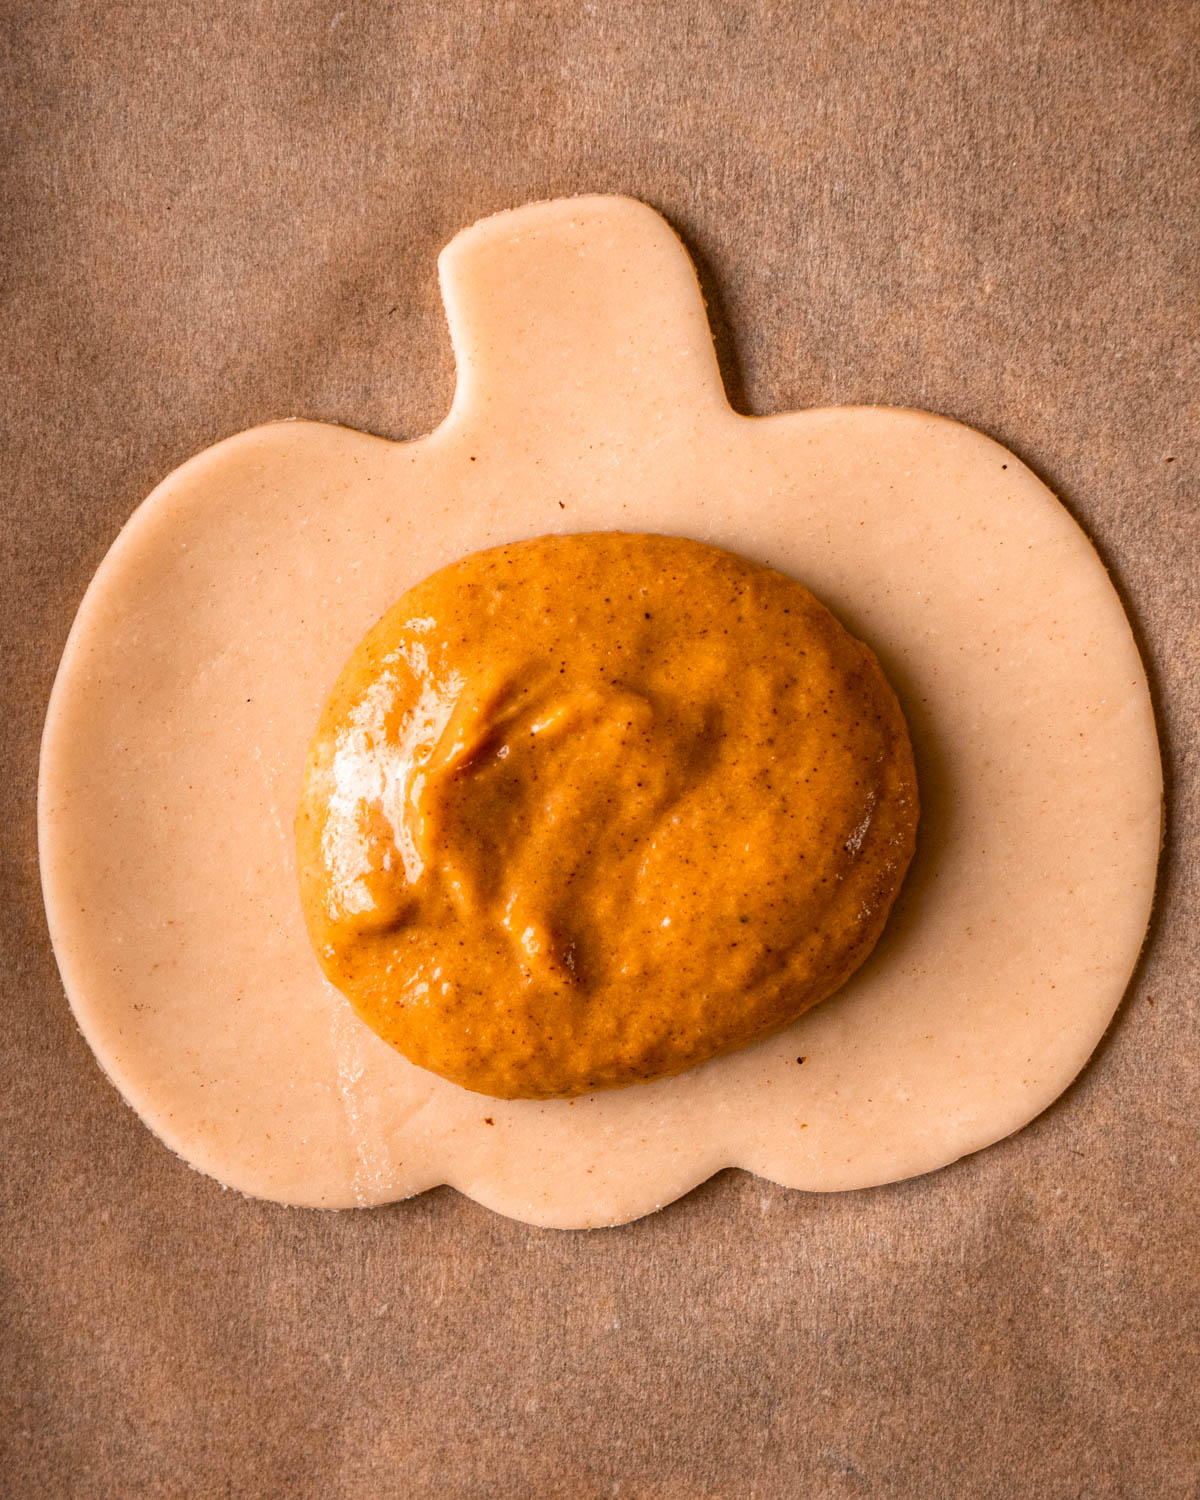 pumpkin shaped pie dough with pumpkin pie filling in the center